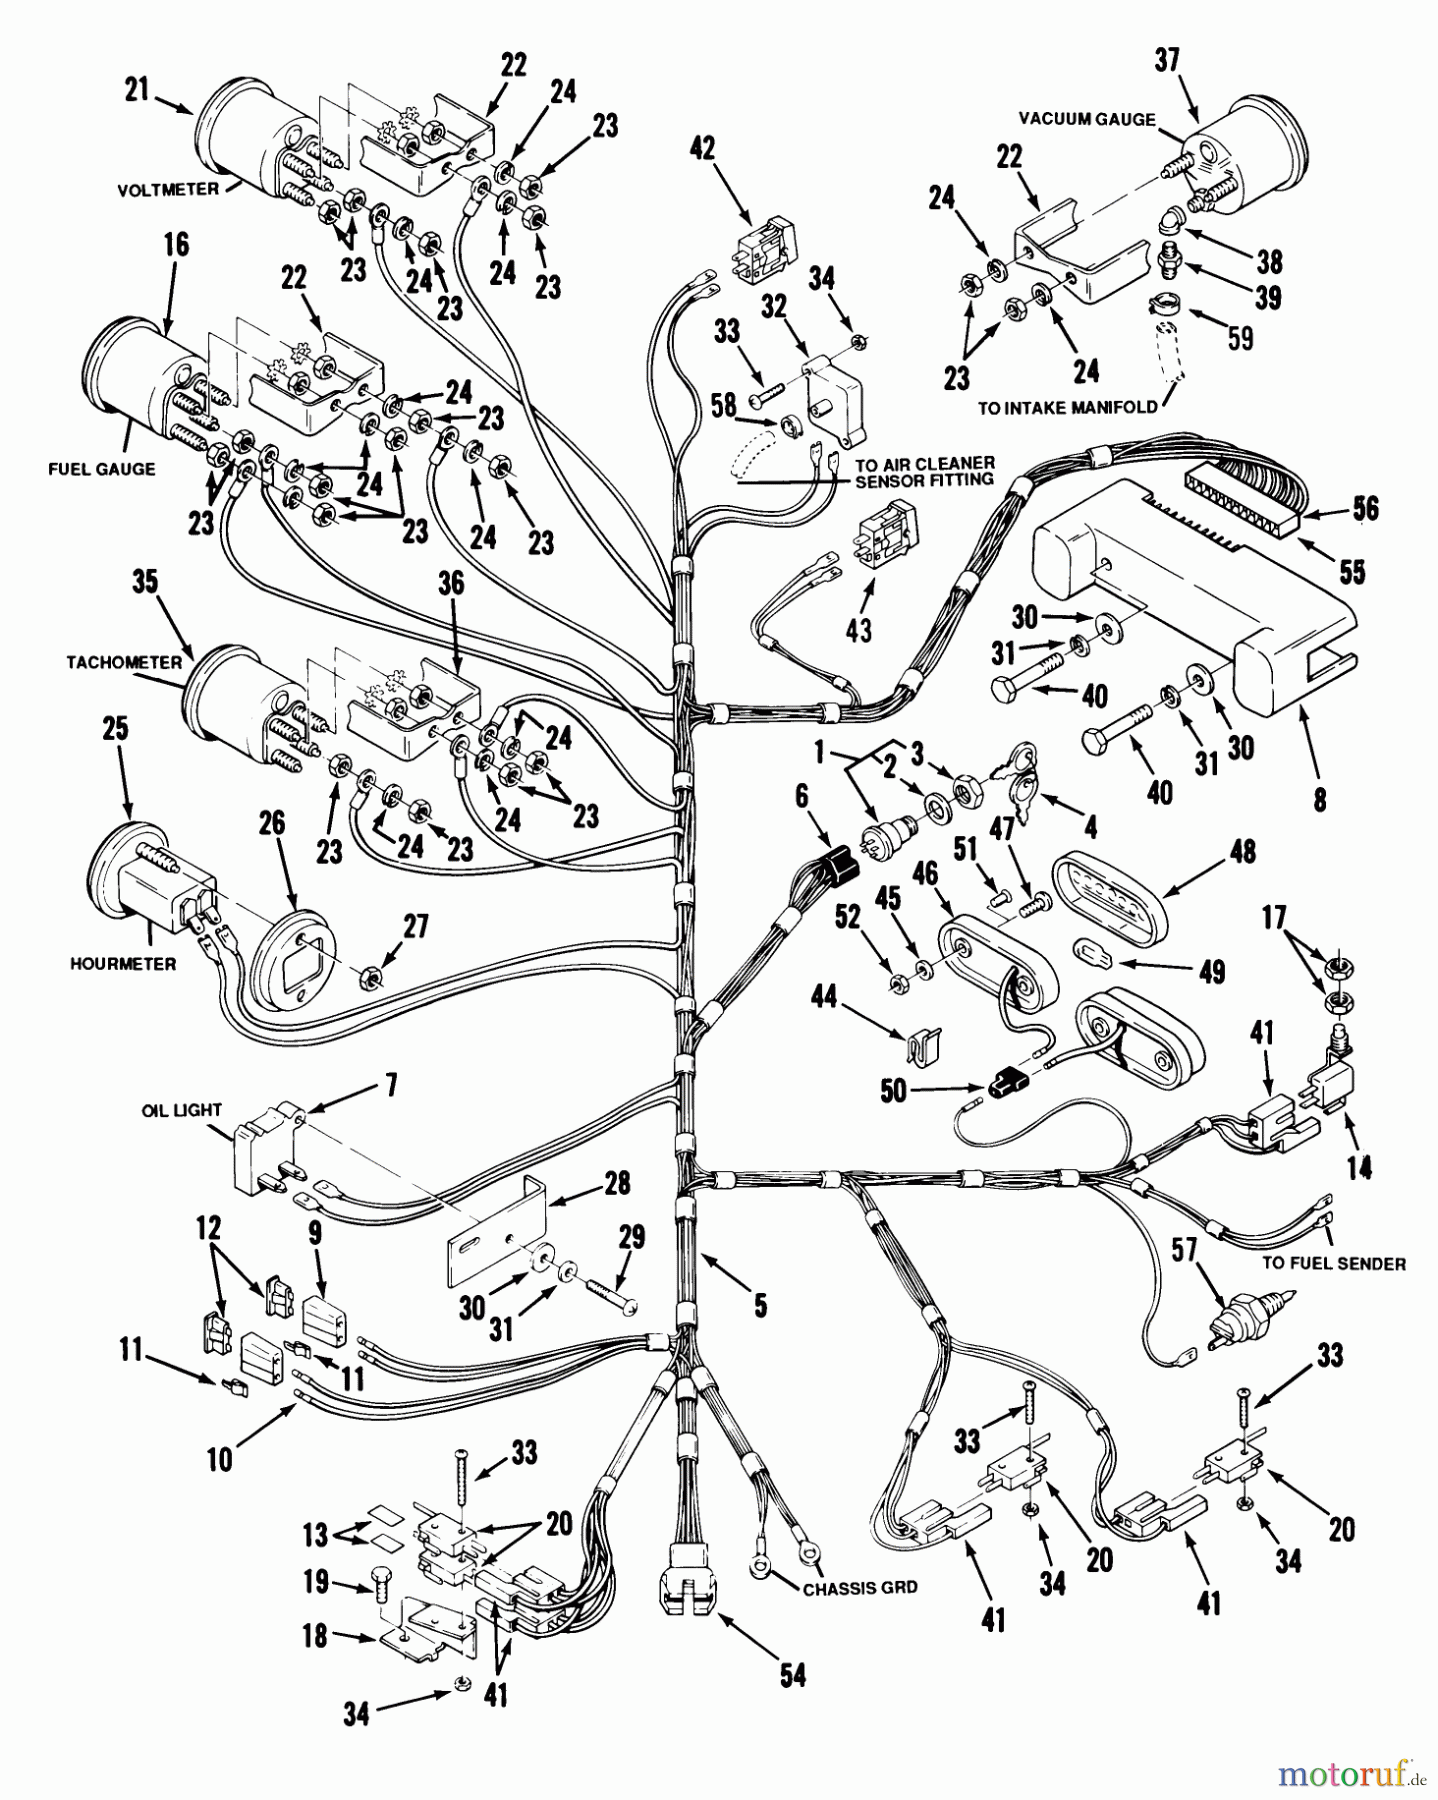  Toro Neu Mowers, Lawn & Garden Tractor Seite 1 31-18OE02 (518-H) - Toro 518-H Garden Tractor, 1989 ELECTRICAL SYSTEM #1